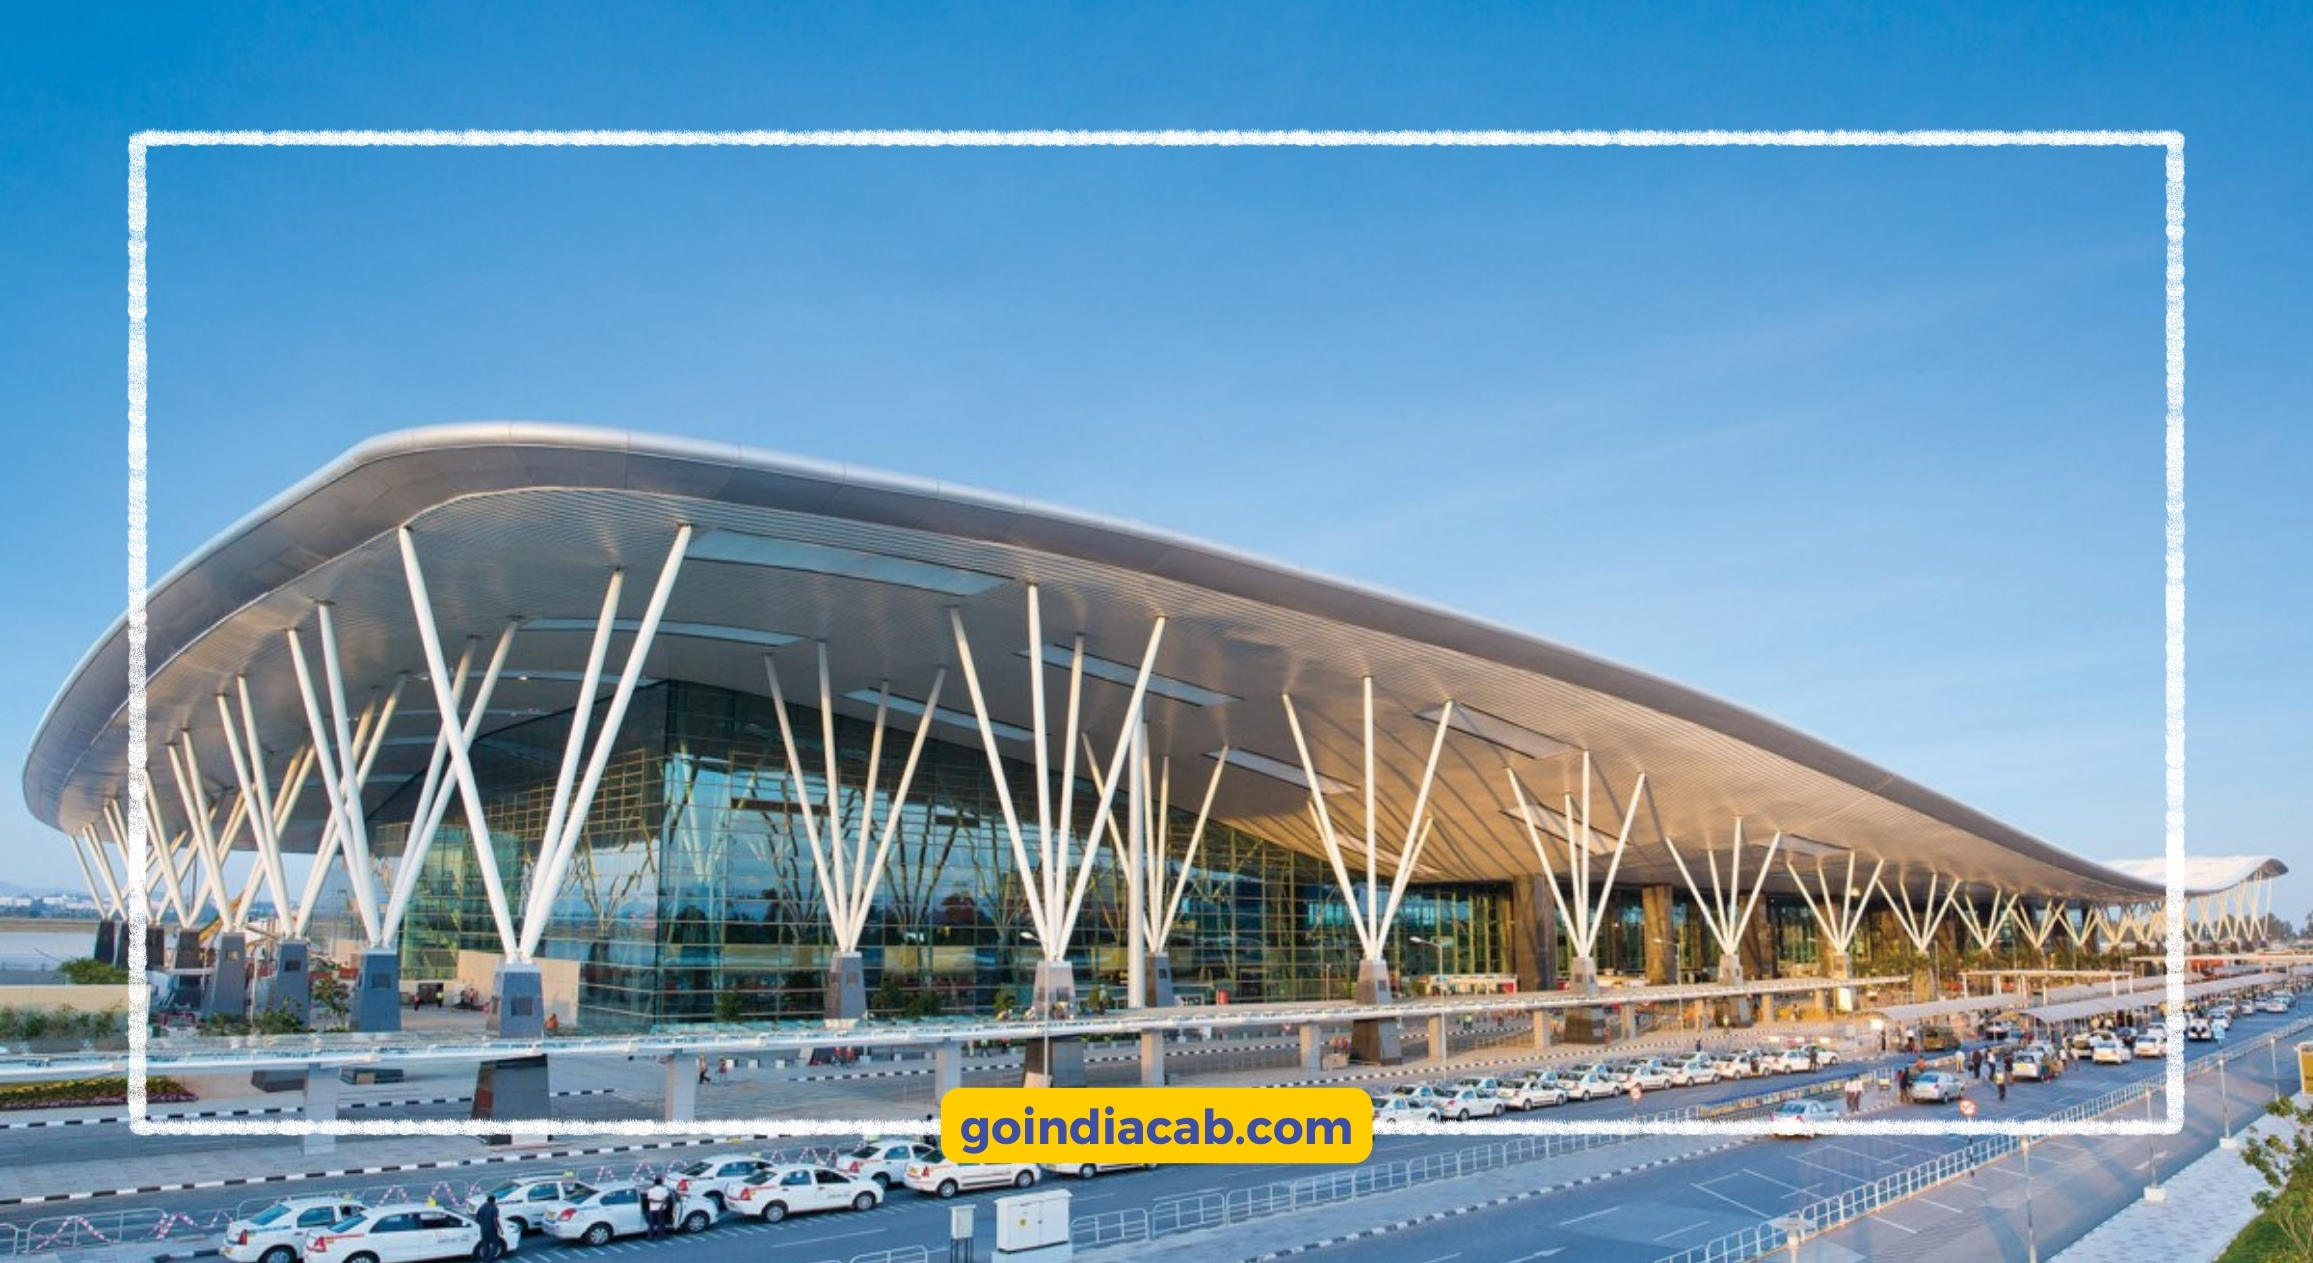  Airport Image in Bangalore goindiacab